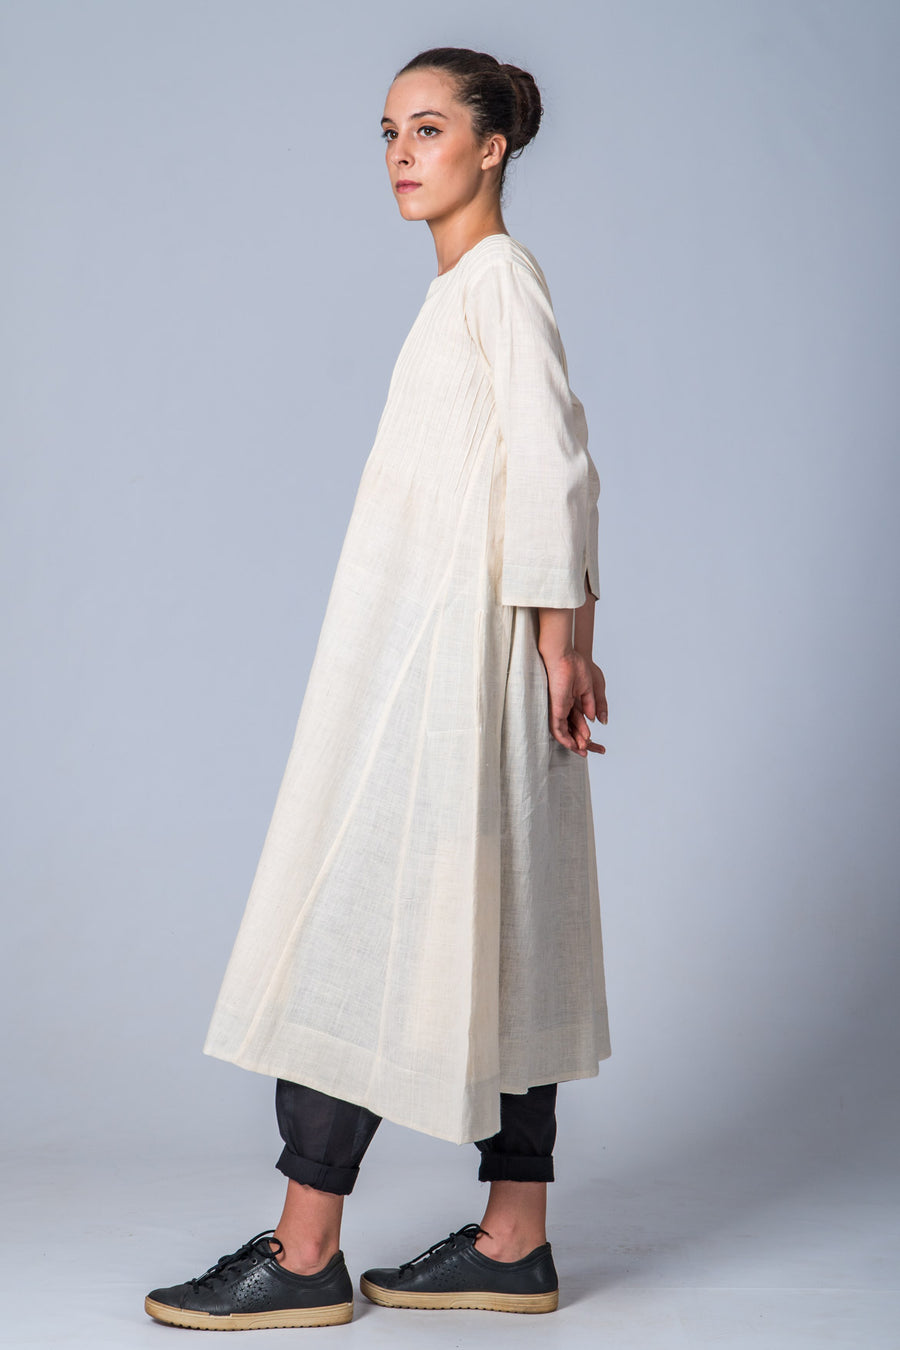 Off-white Handspun Handwoven Dress - UDUPU - Upasana Design Studio